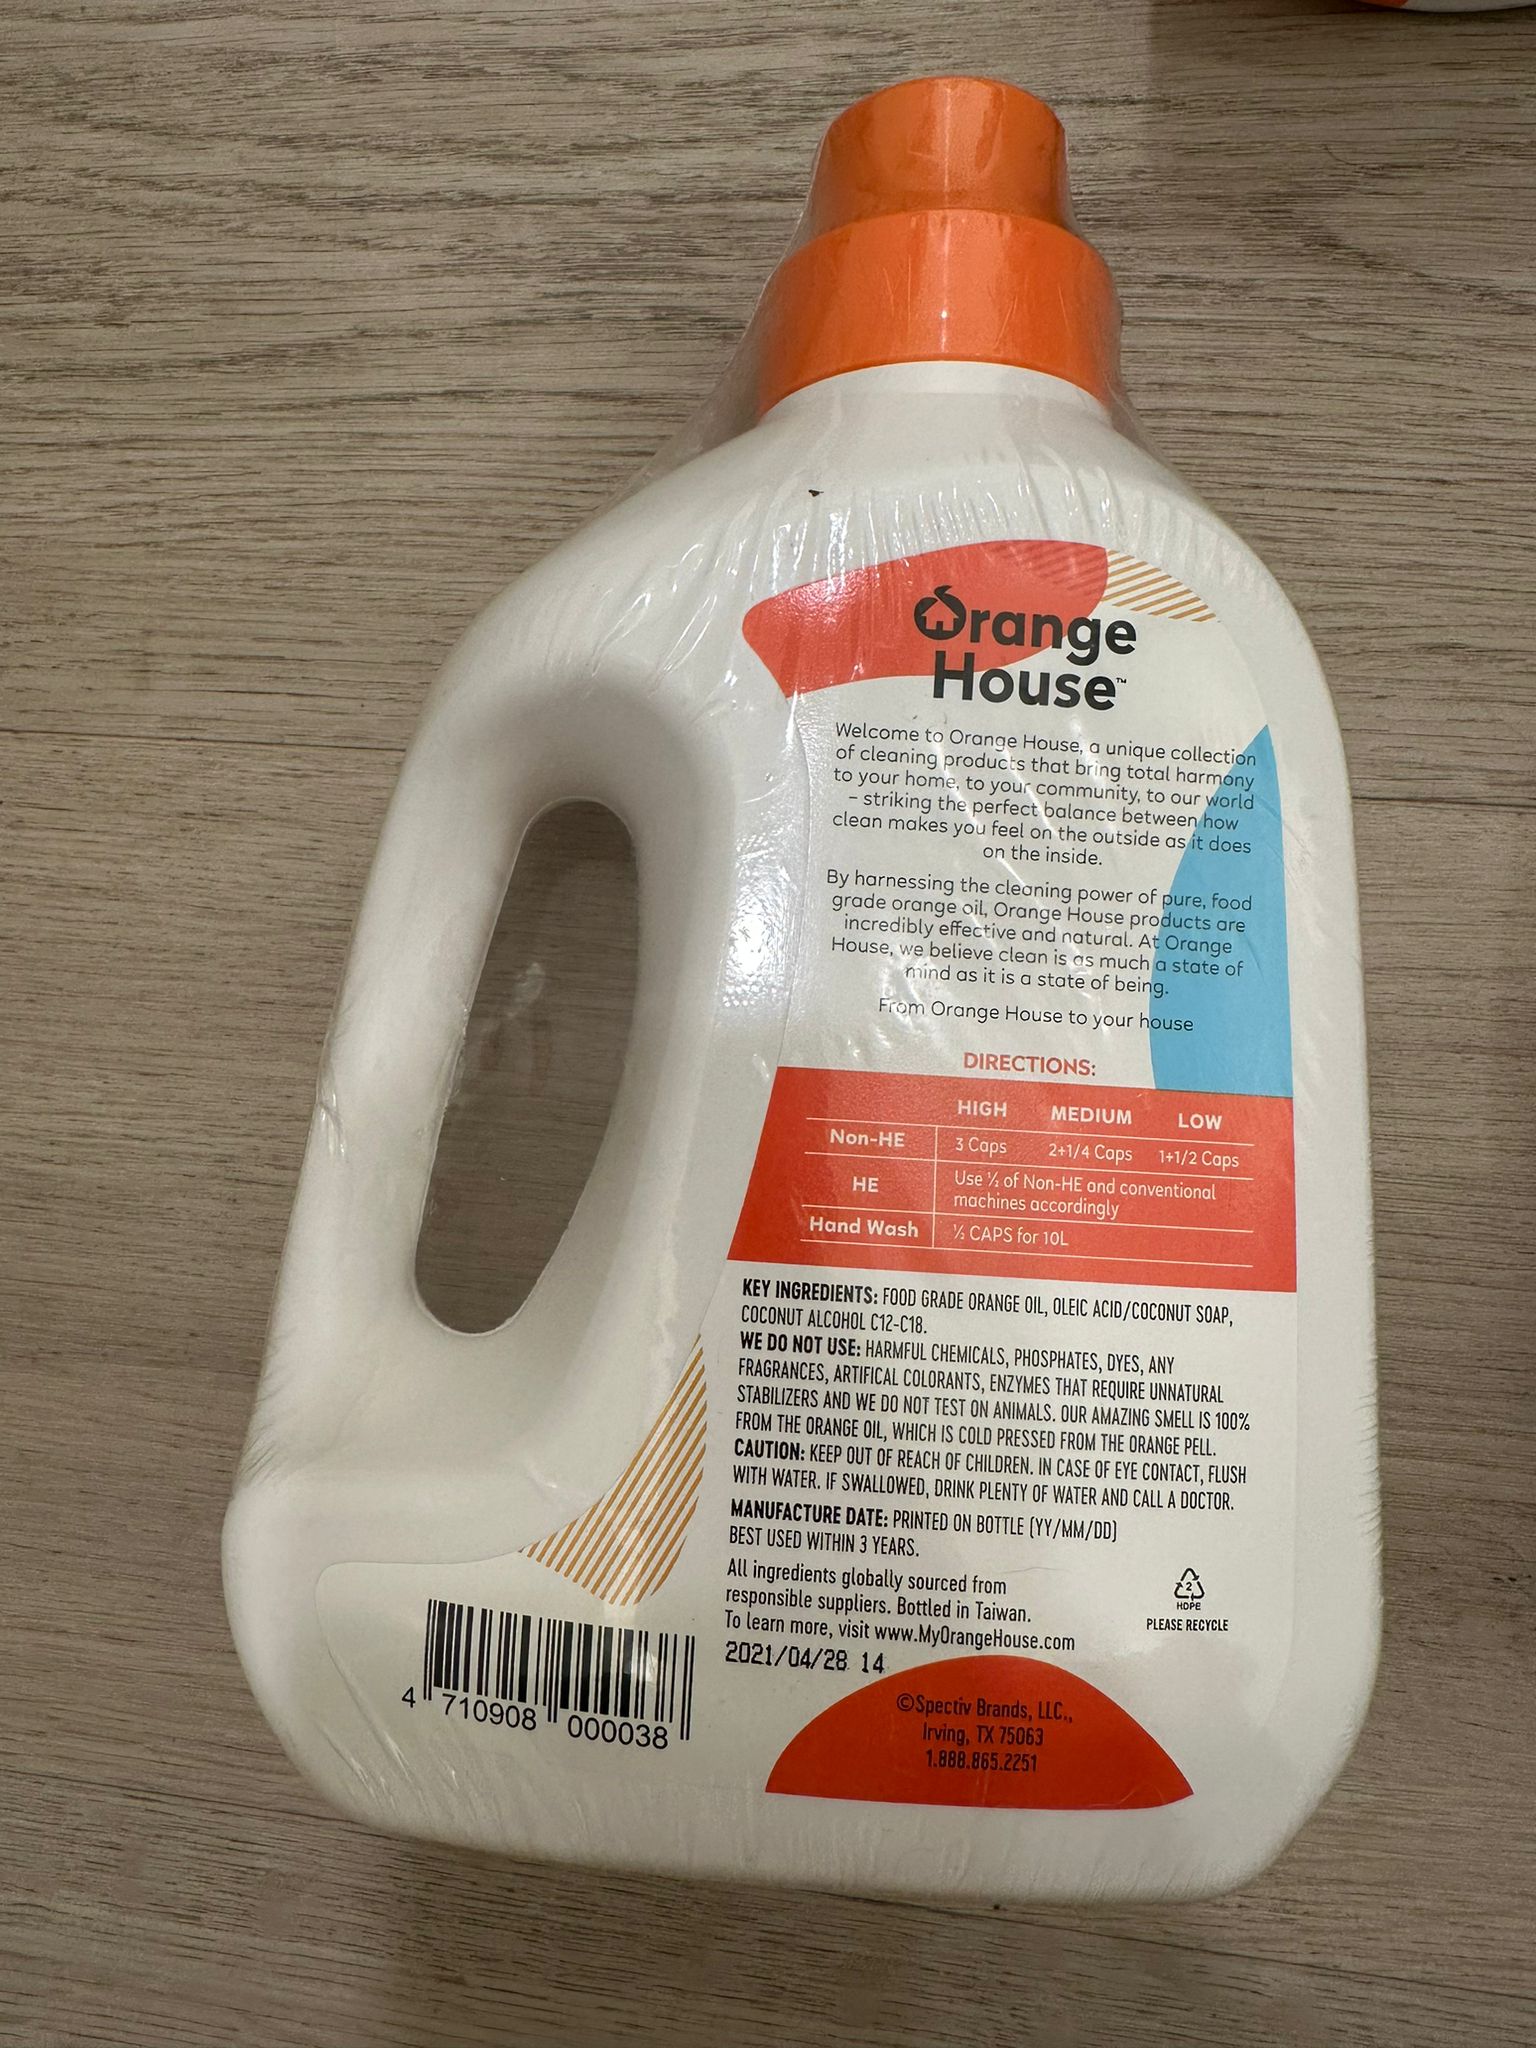 51128 - Orange House 30.4 oz Liquid Baby Laundry Detergent USA